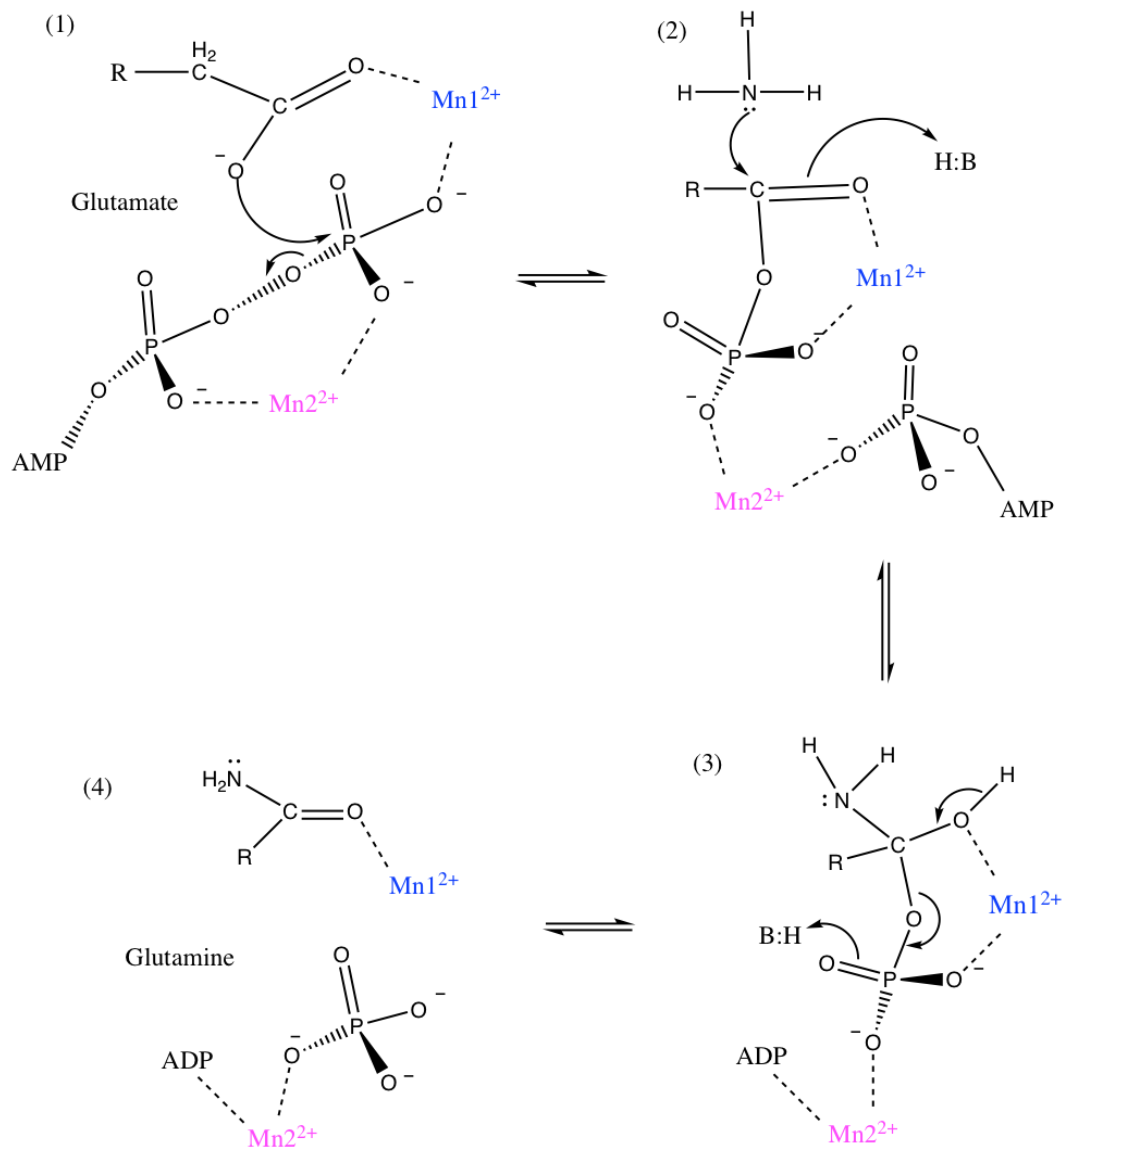 Proposed mechanism of glutamine synthetase's conversion of glutamate to glutamine